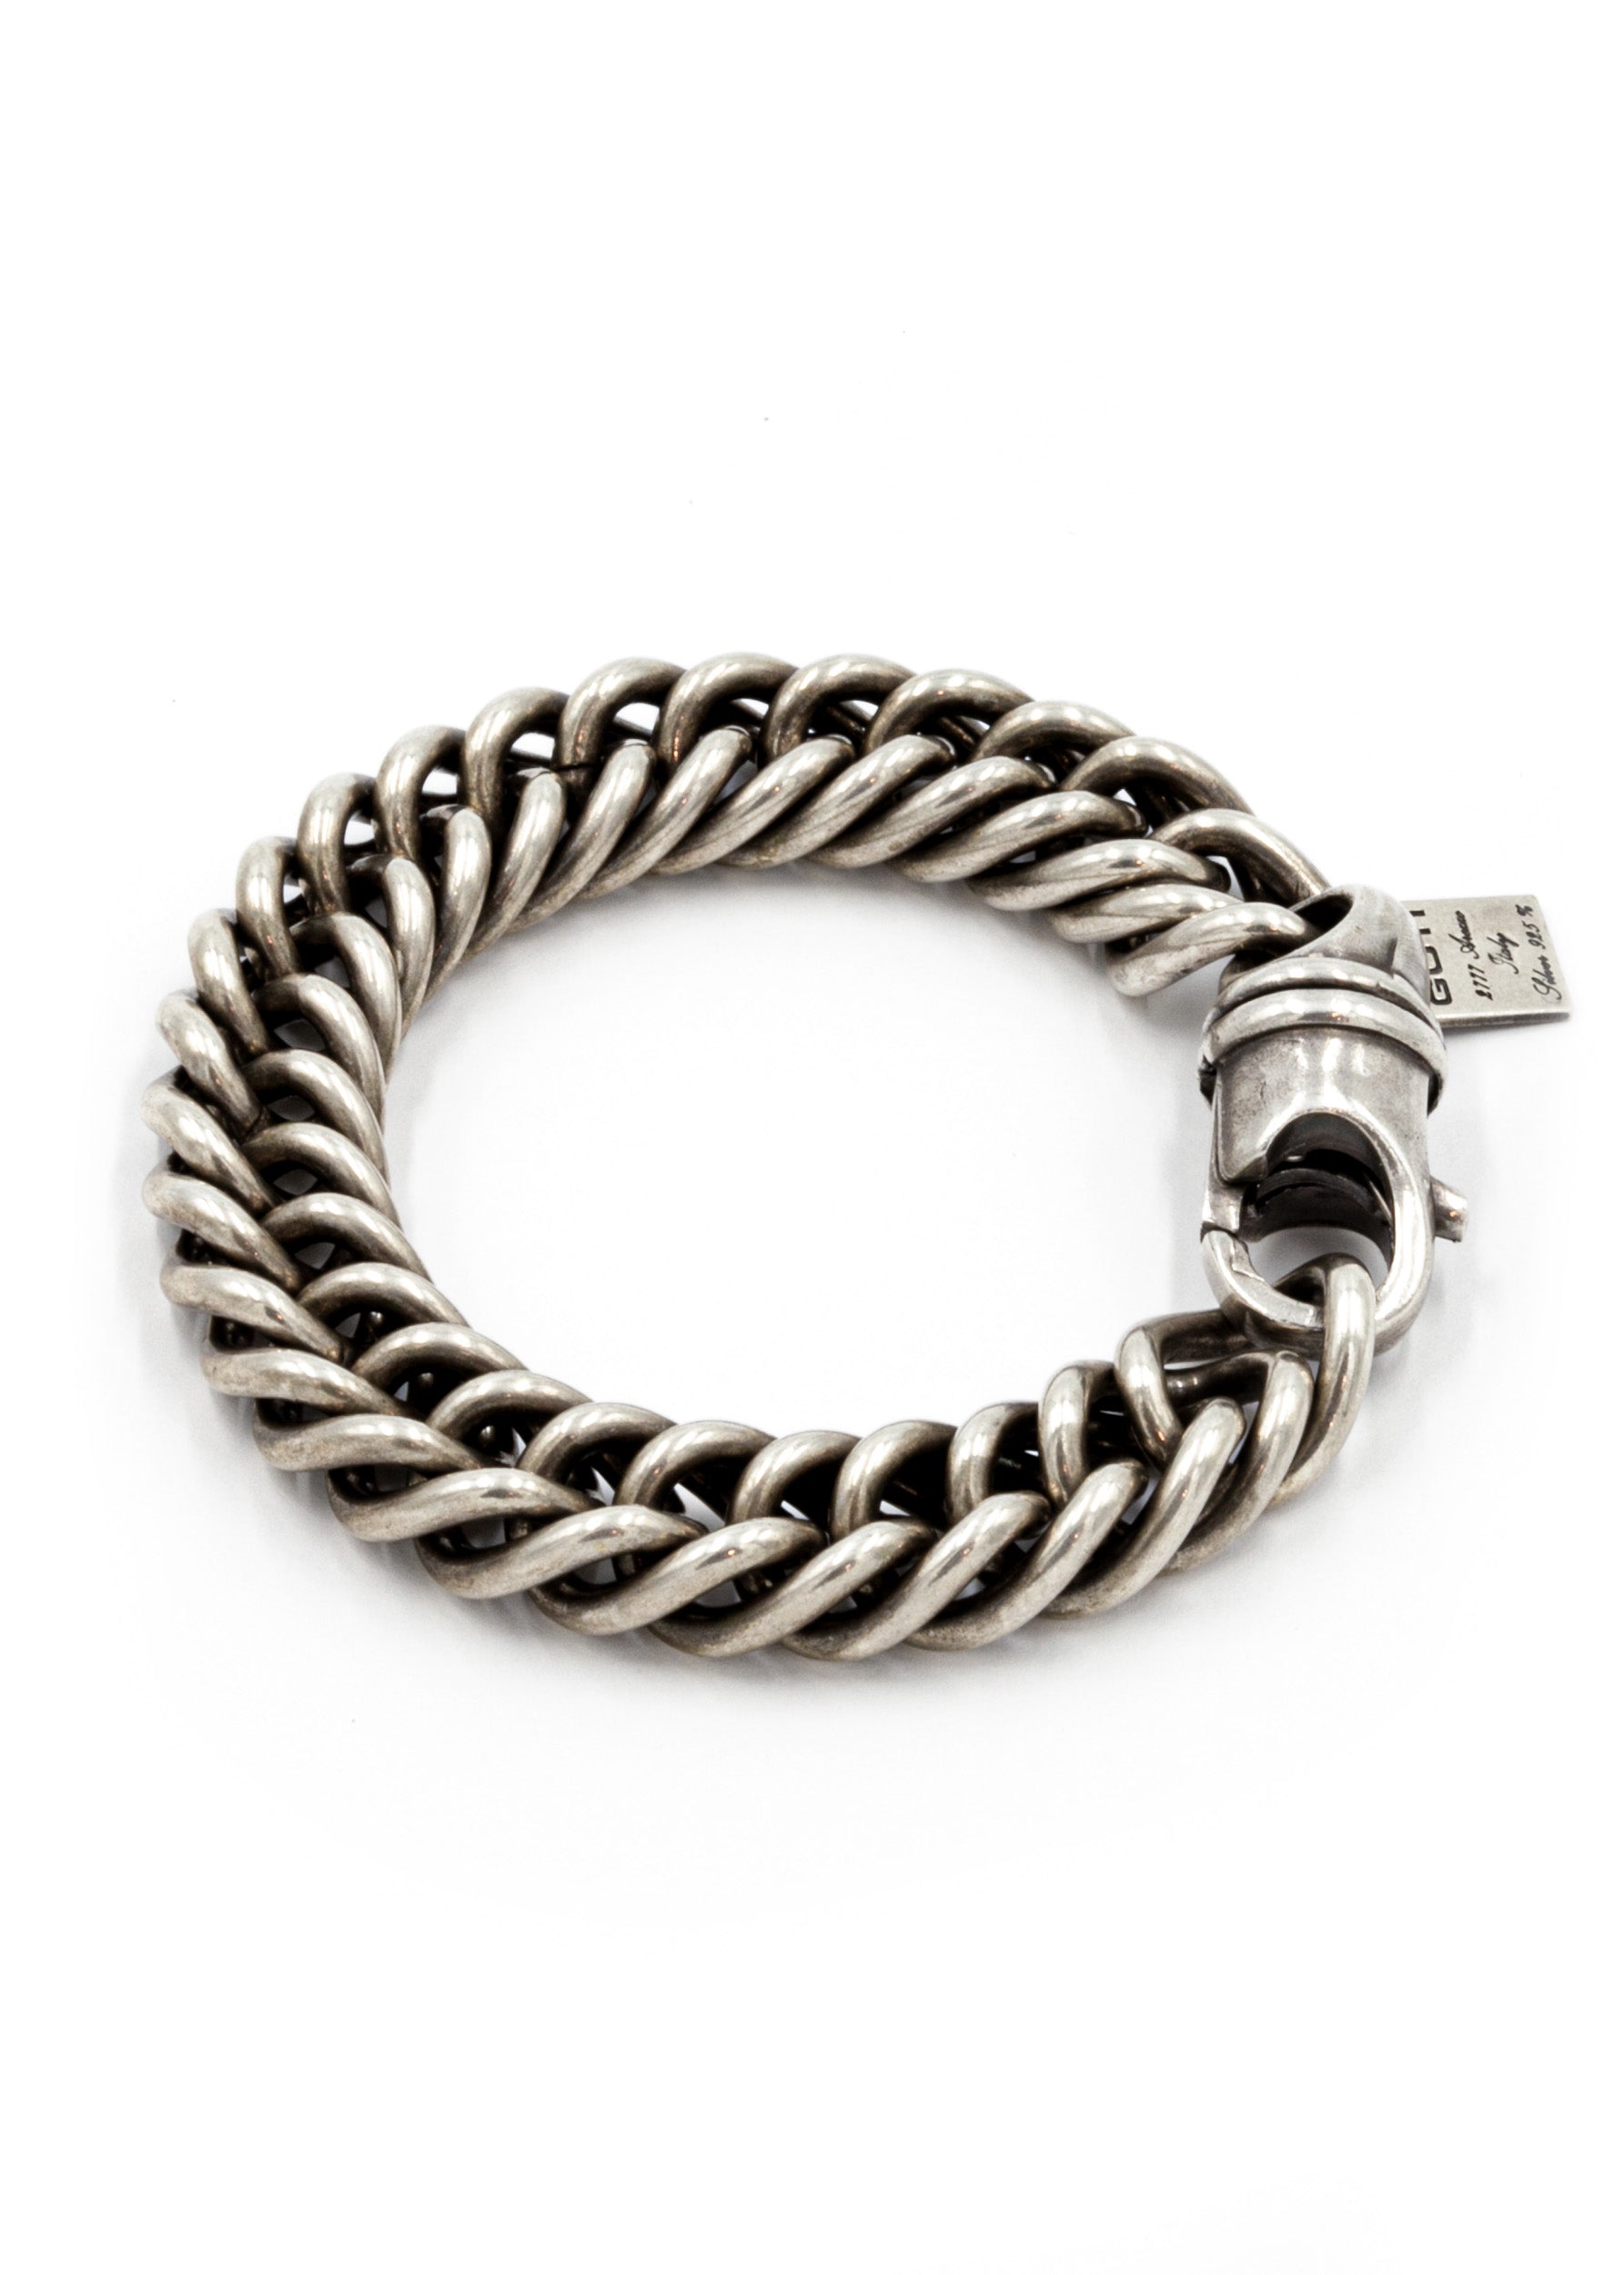 GOTI silver chain ring bracelet sv925 - ブレスレット